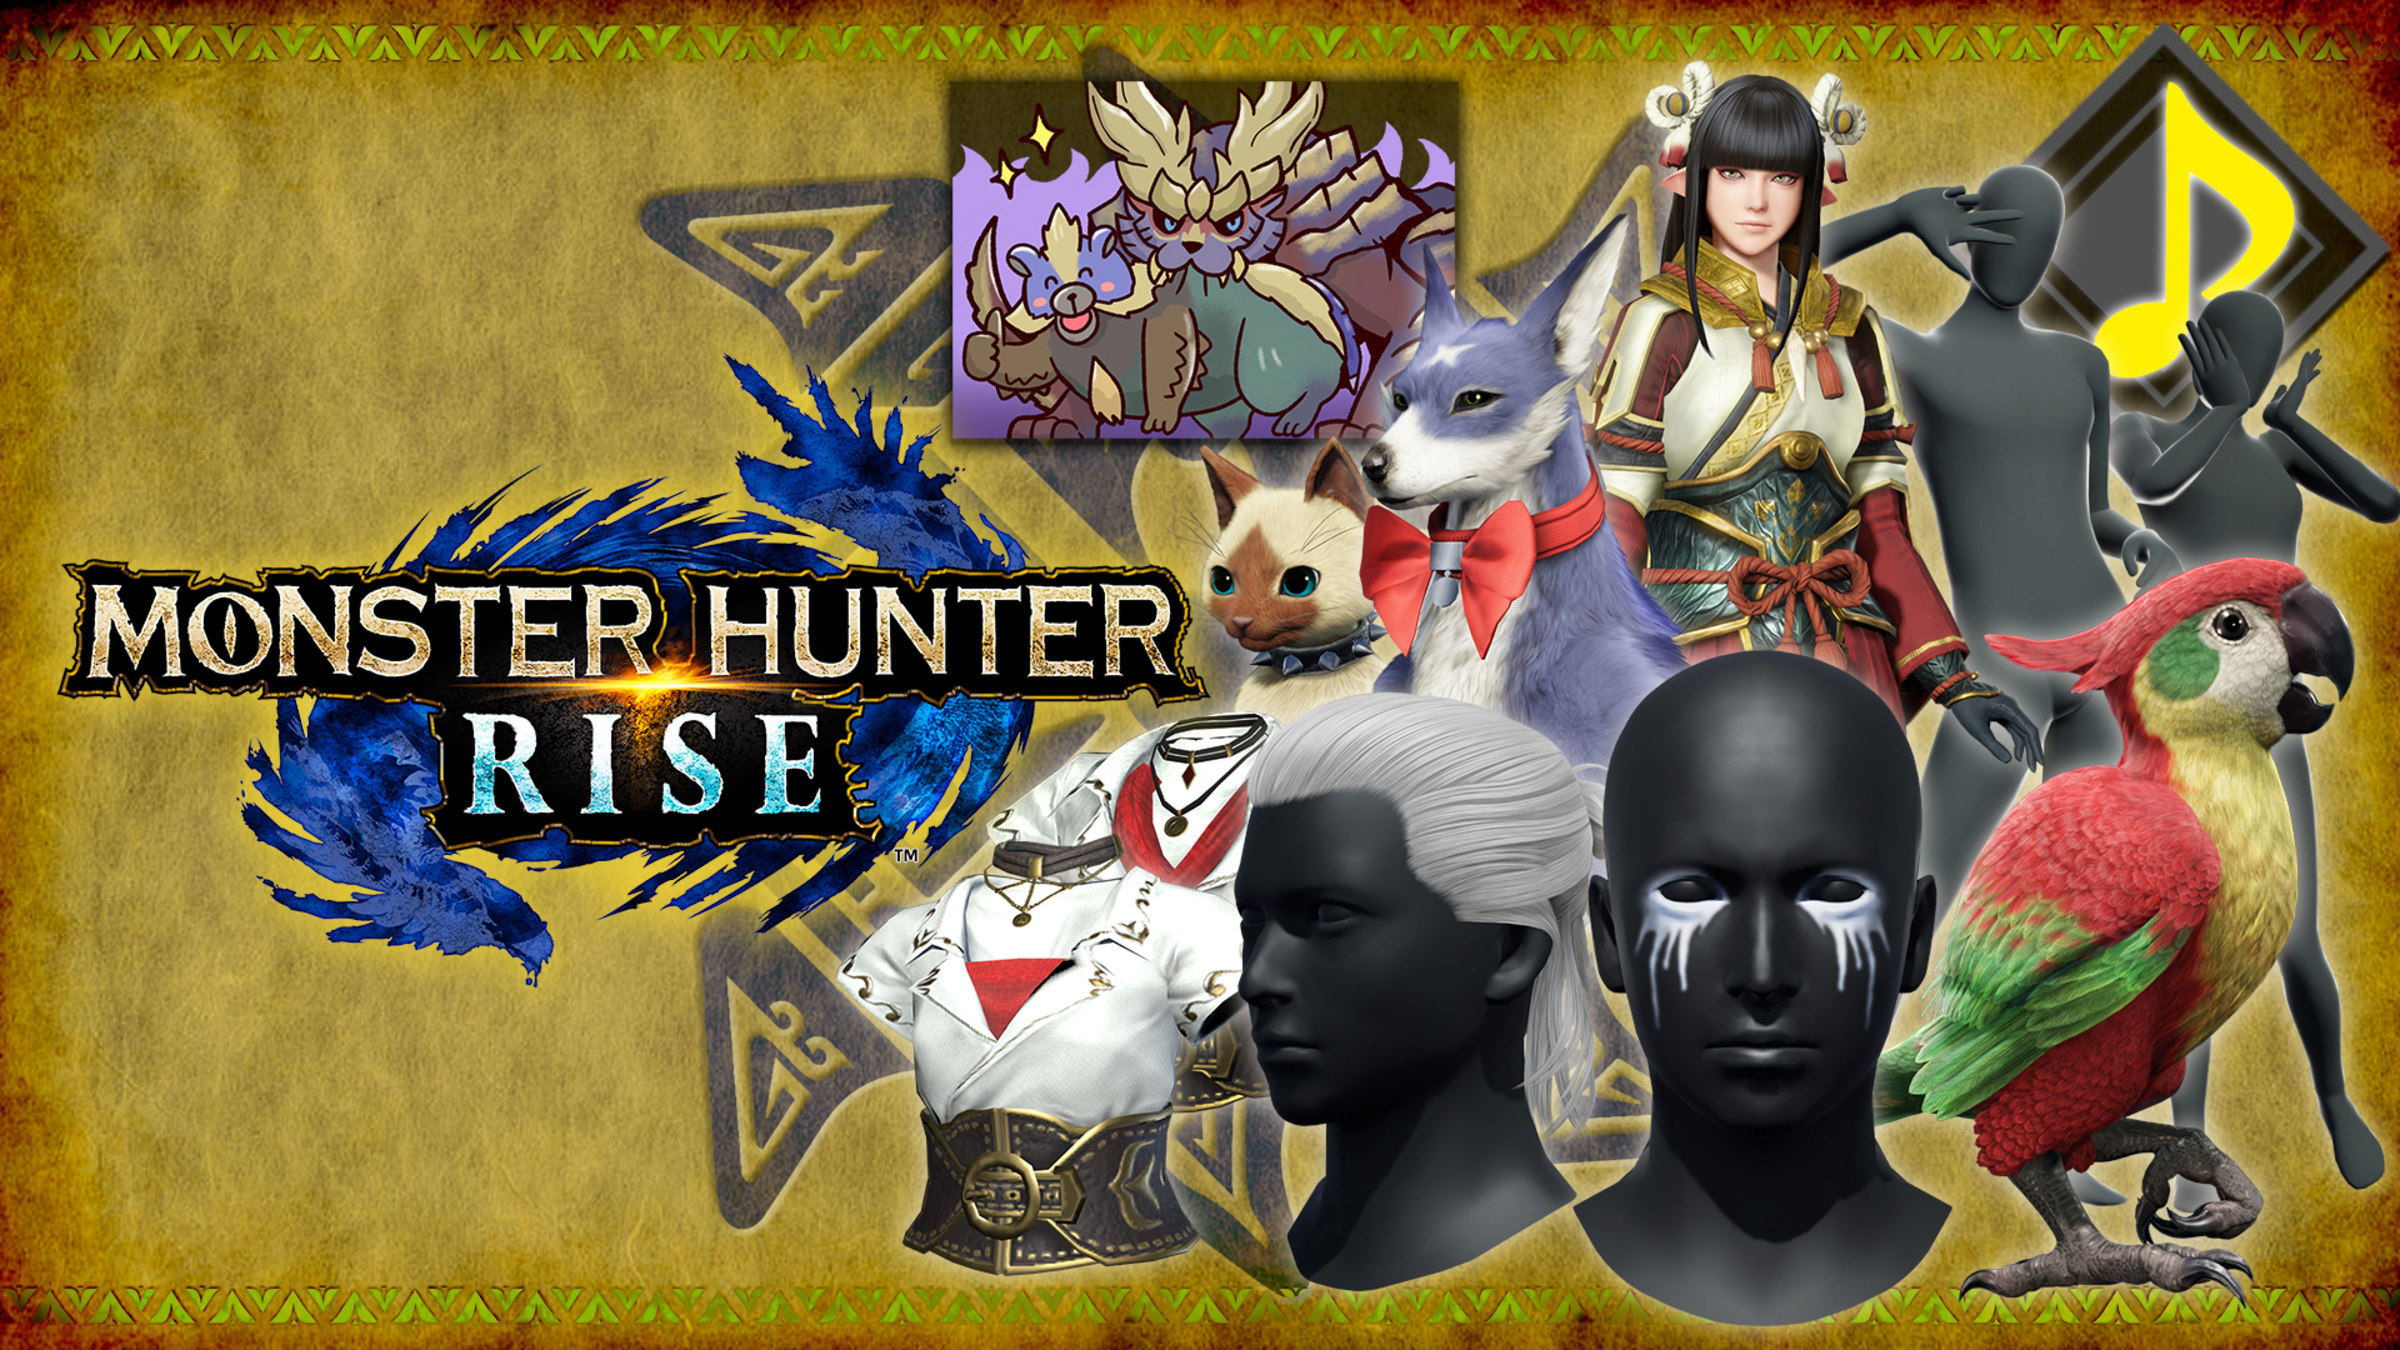 Monster Hunter Site for 2 DLC Nintendo Official Pack Rise Nintendo - Switch